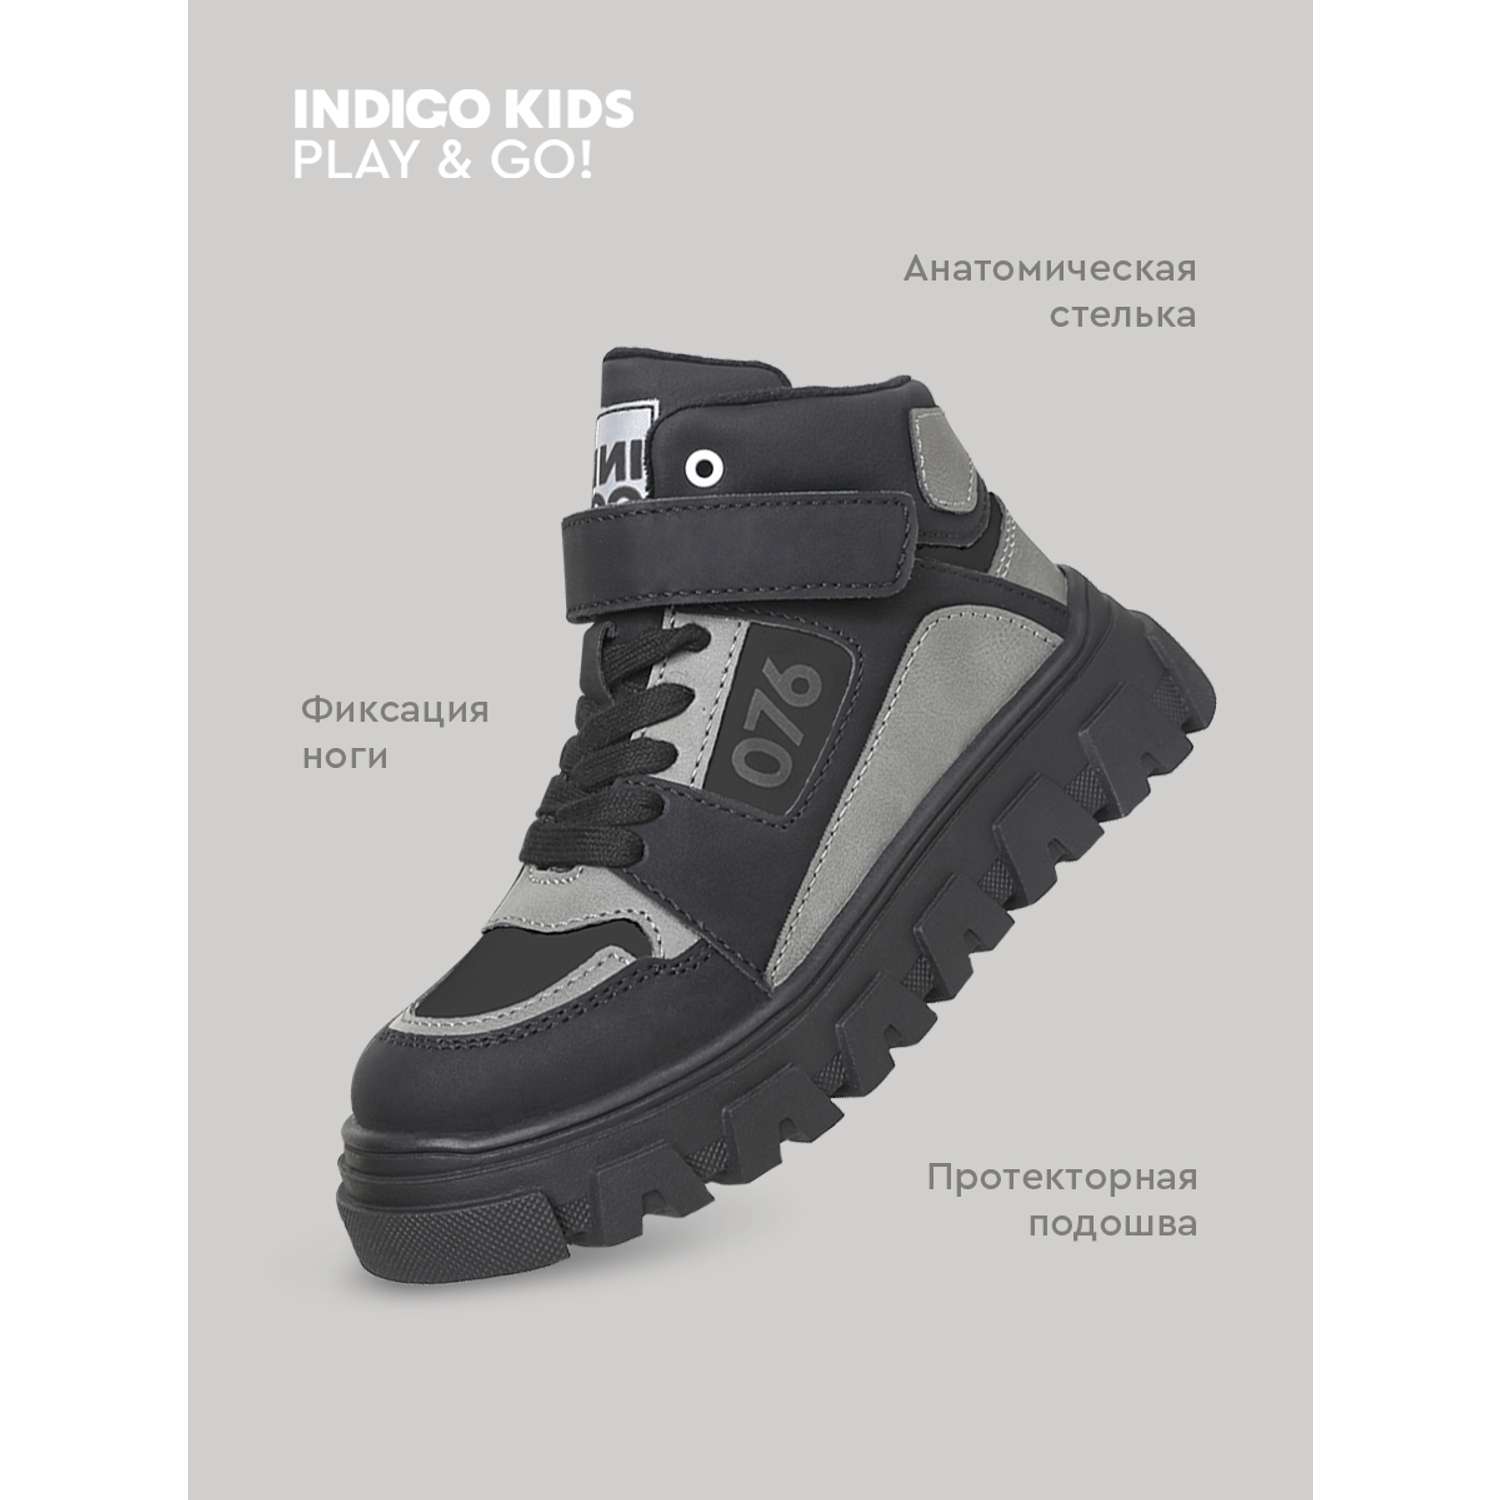 Ботинки Indigo kids 54-0015D - фото 6